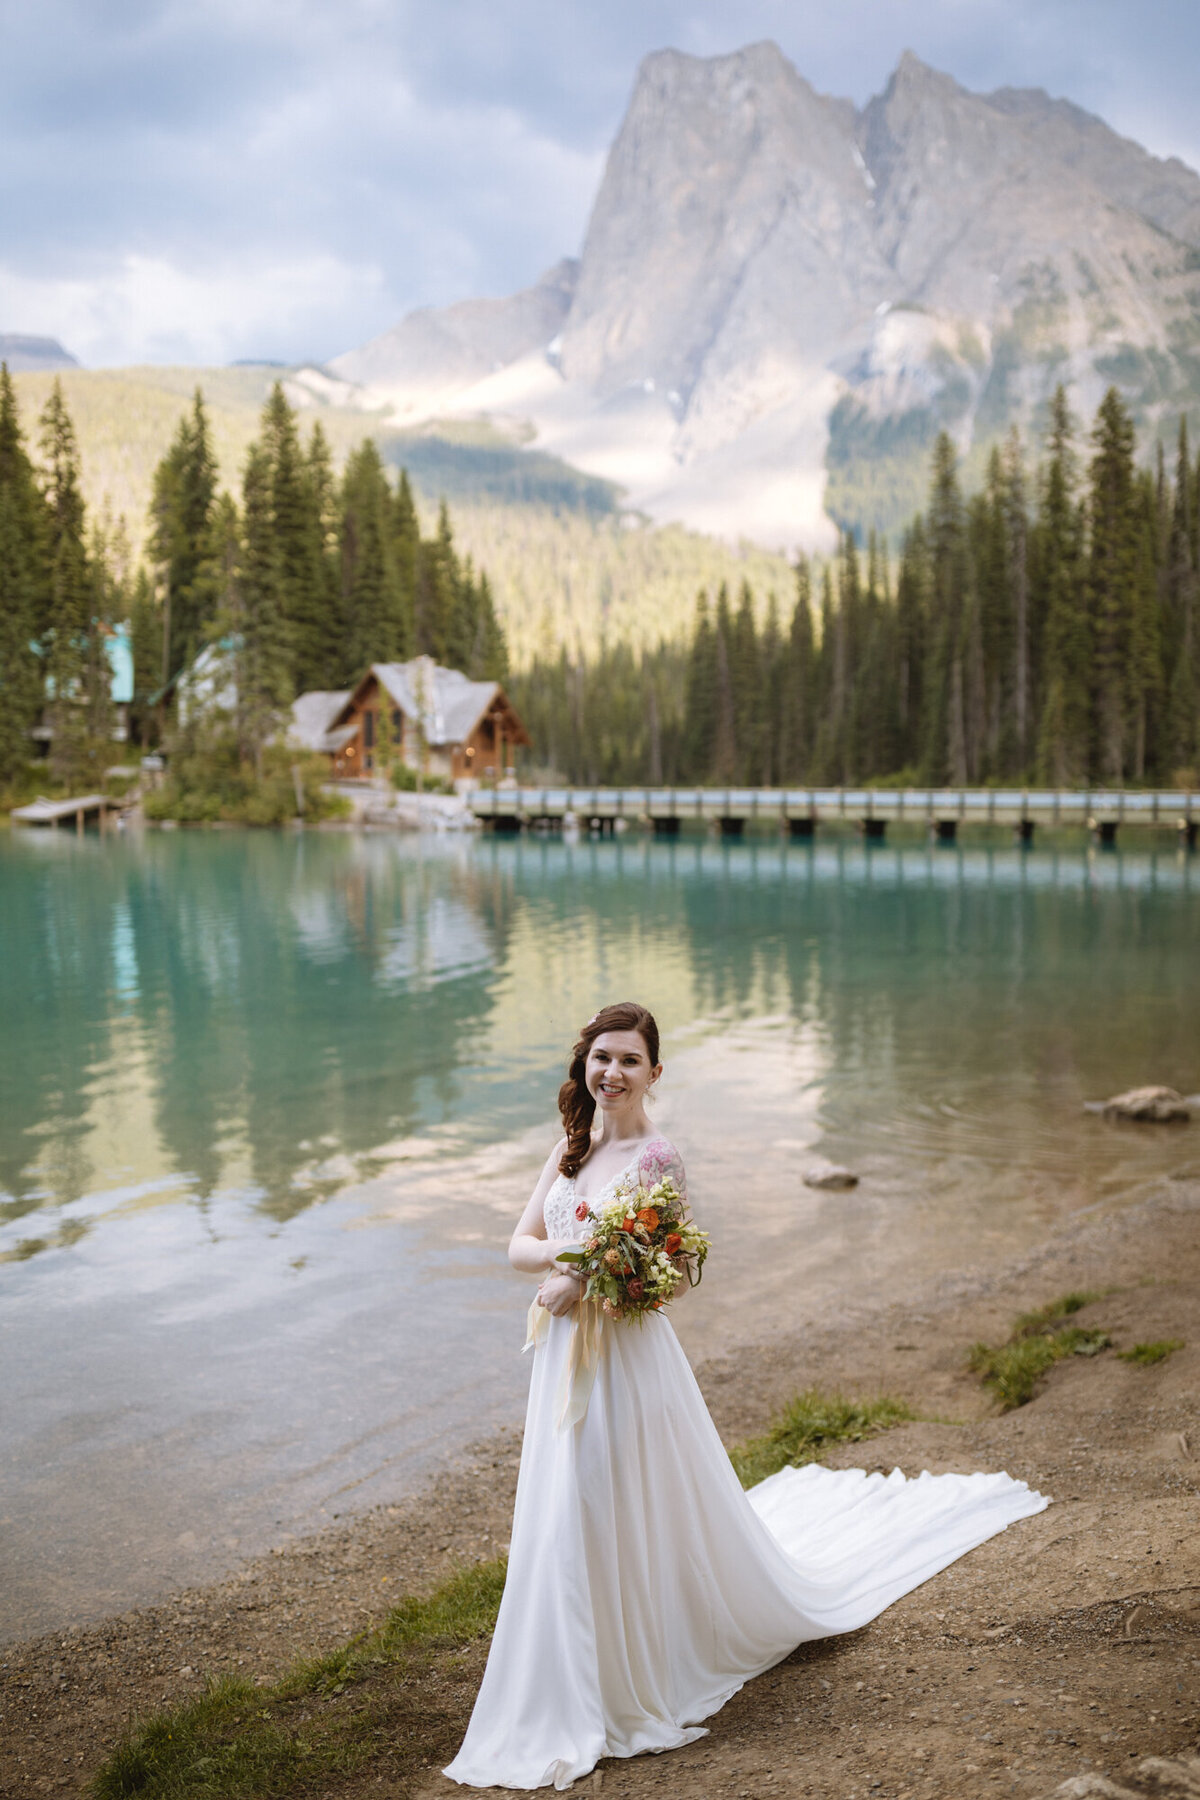 Stunning bridal portrait at Emerald Lake Lodge wedding, featured on the Brontë Bride Vendor Guide.